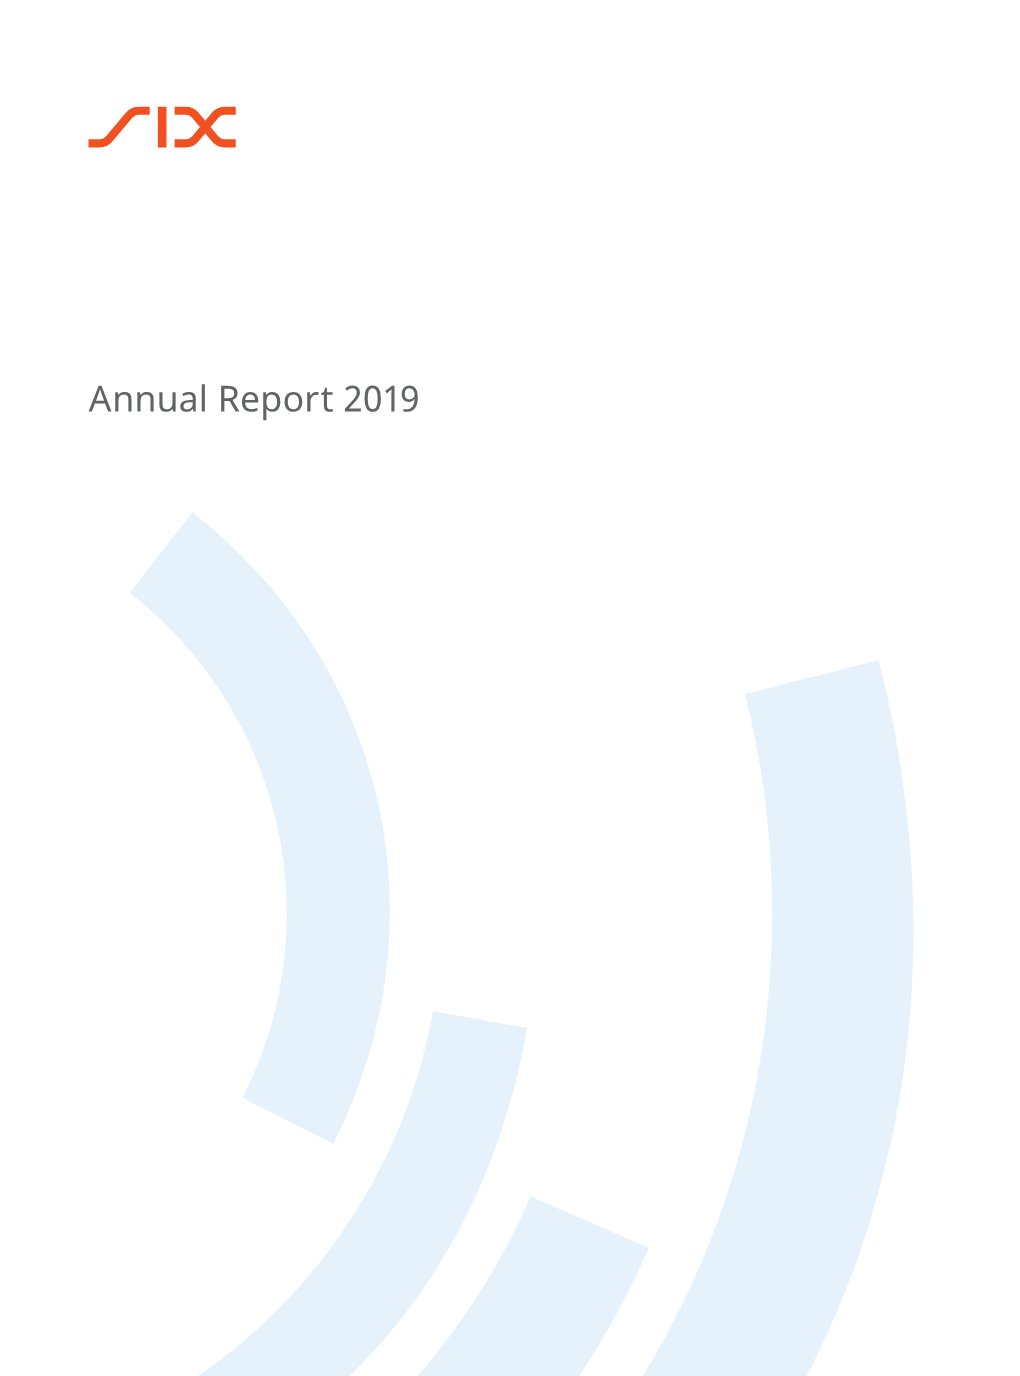 SIX Annual Report 2019